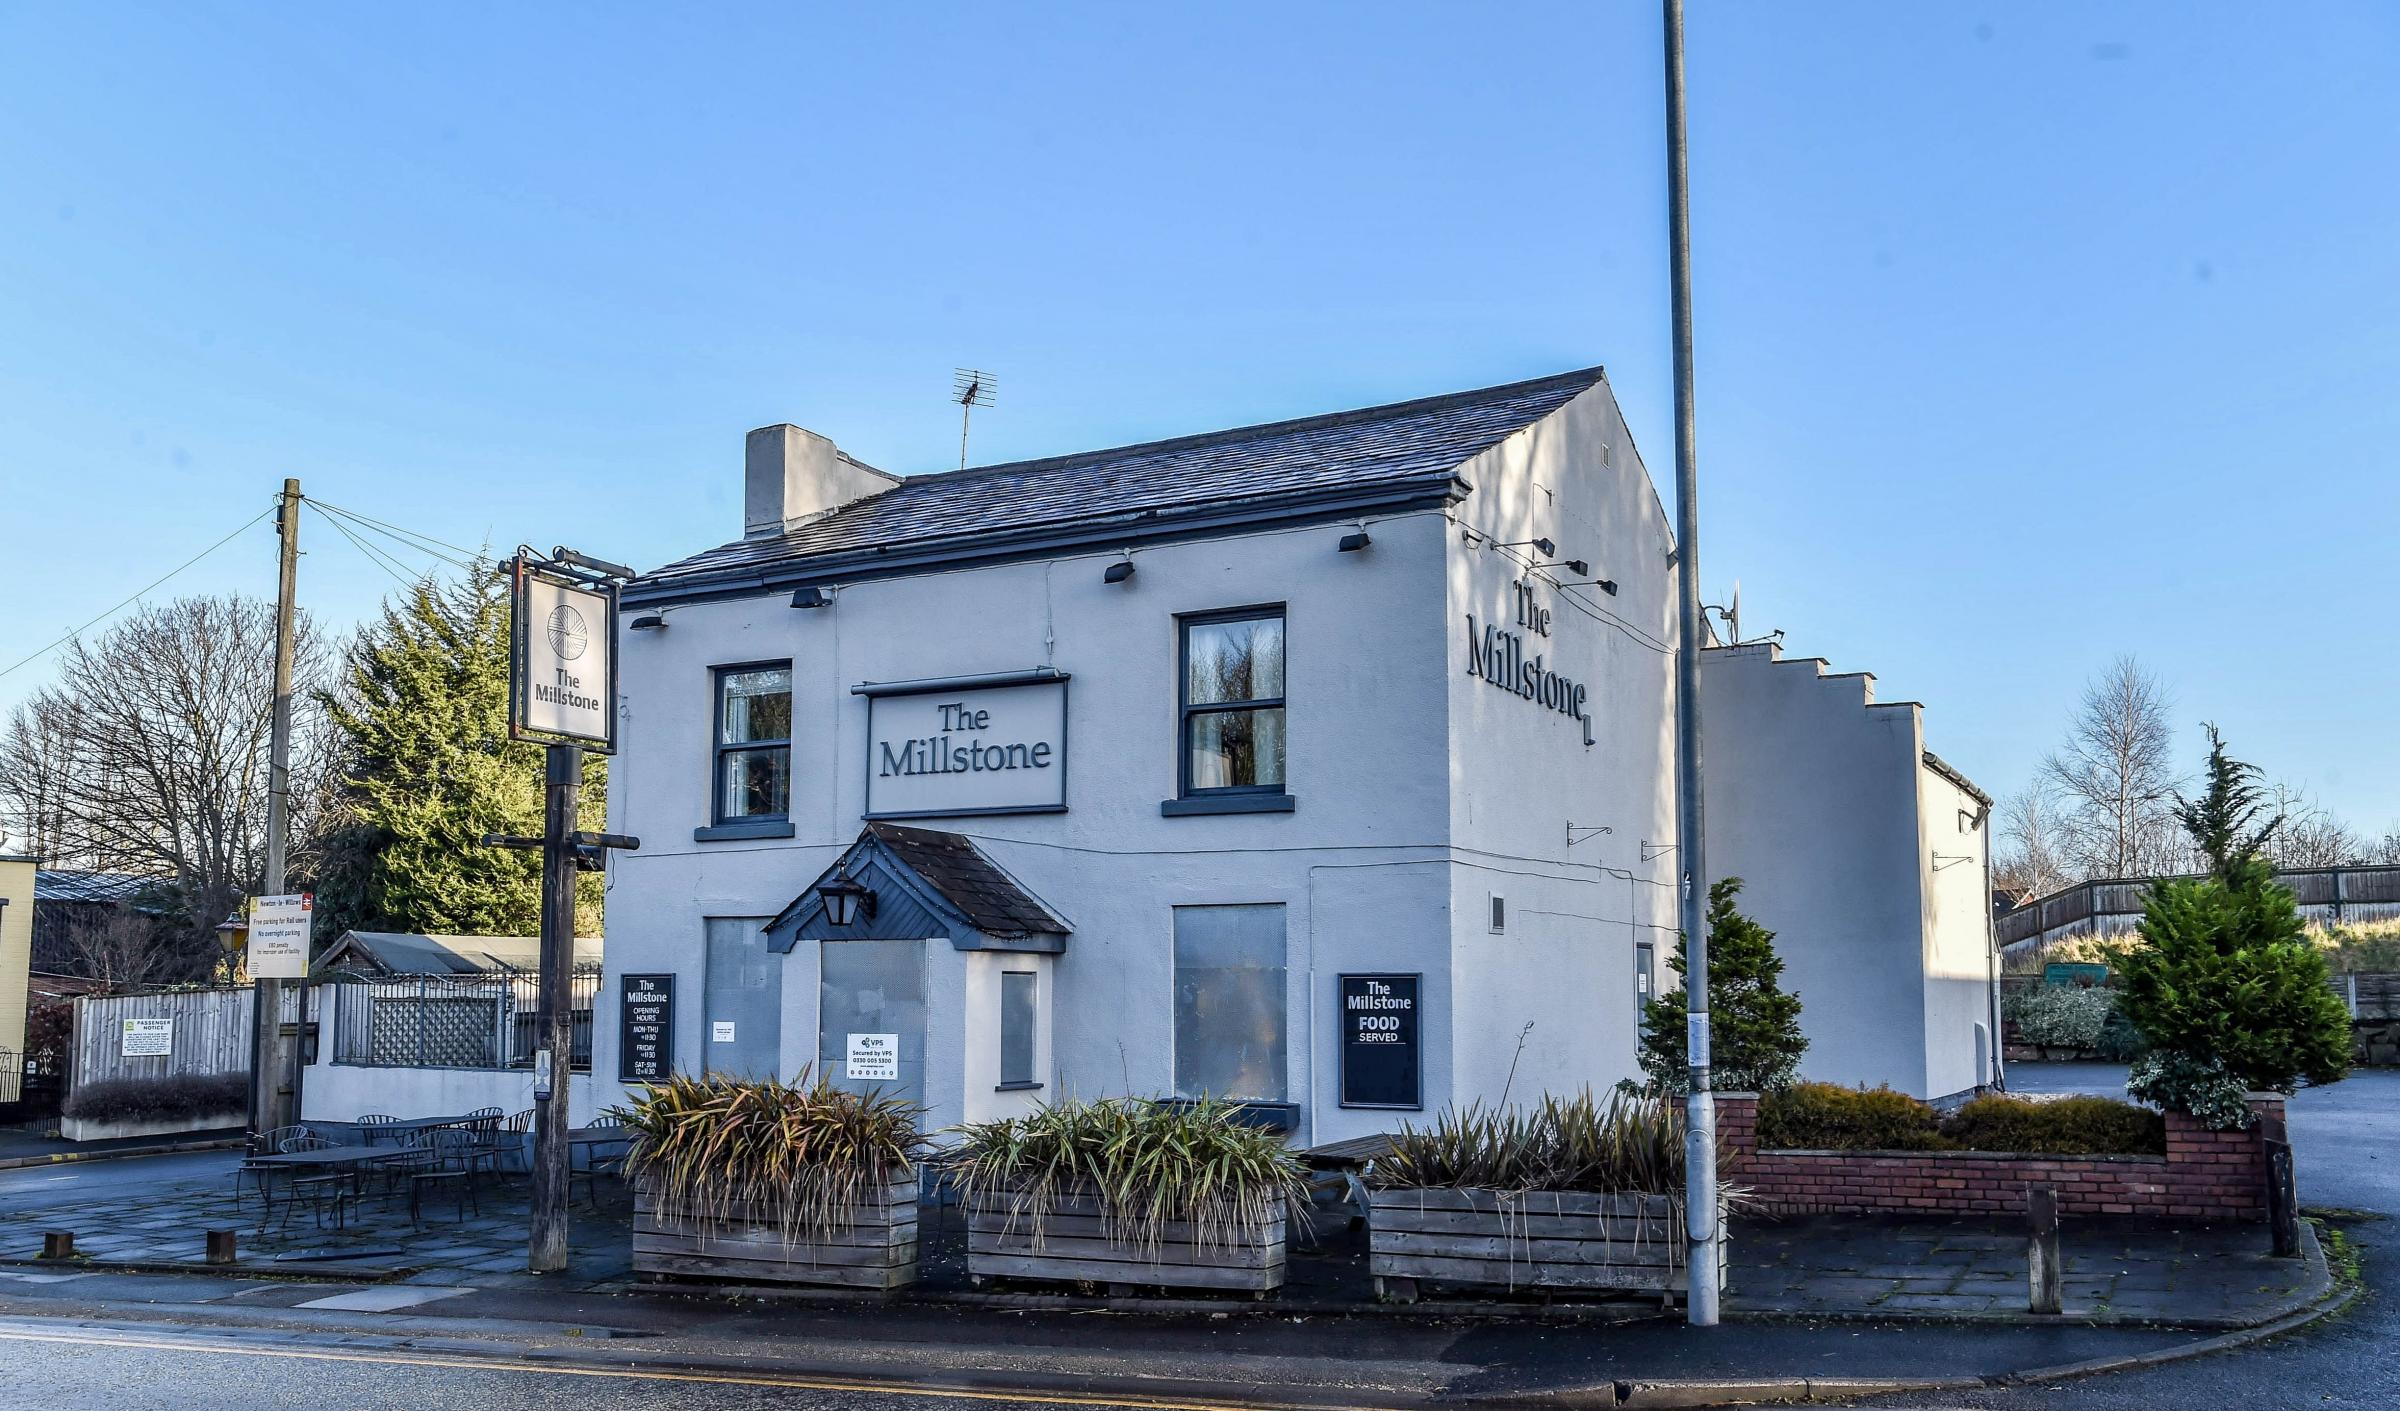 The Millstone pub